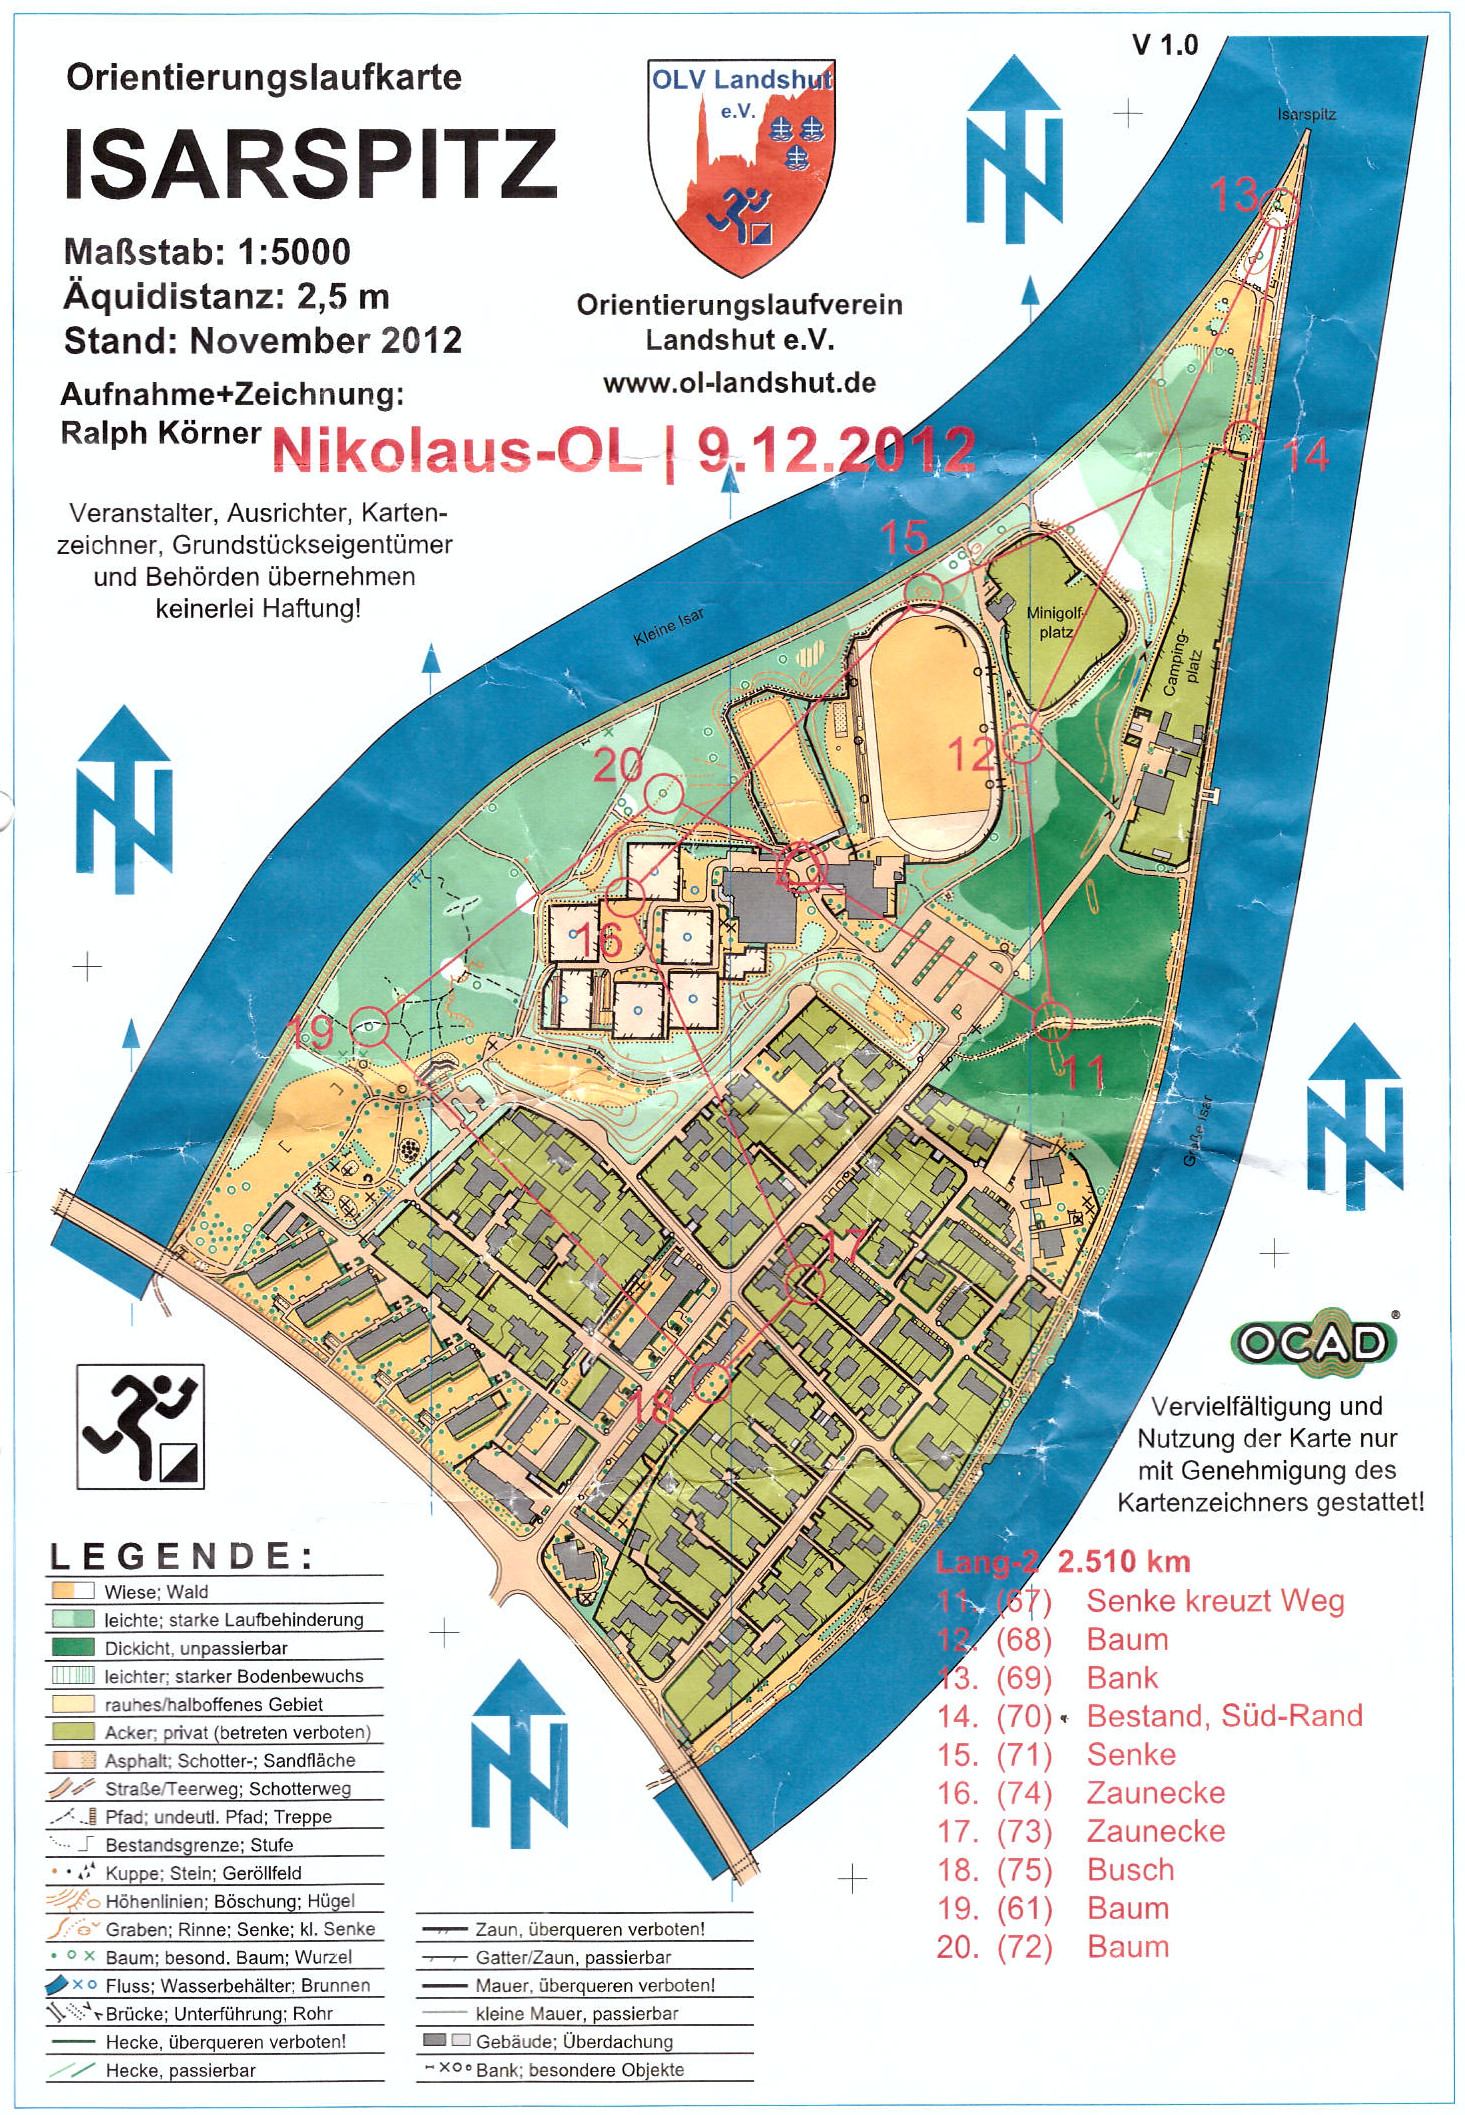 9. Landshuter Nikolaus-OL - Karte 2 (09/12/2012)